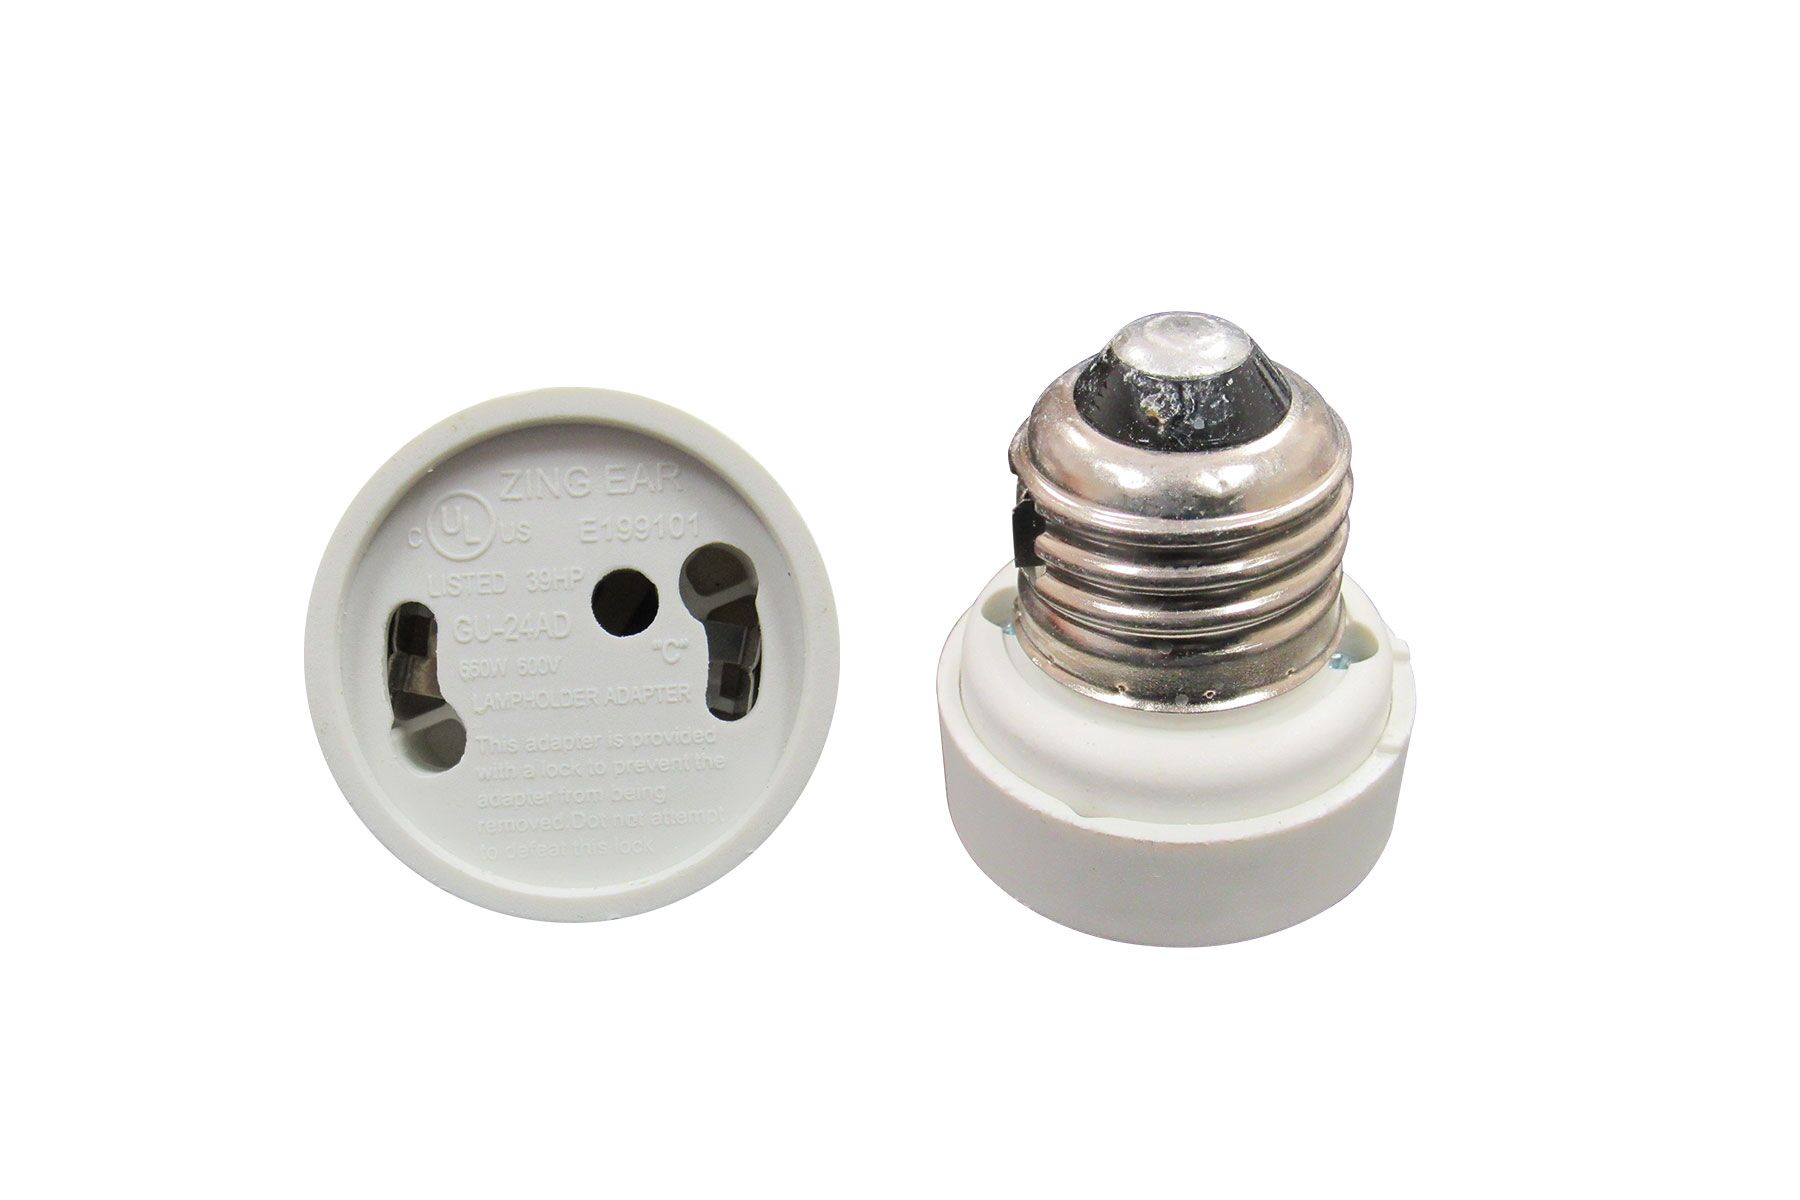 E26 to GU24 Light Bulb Socket Adapter